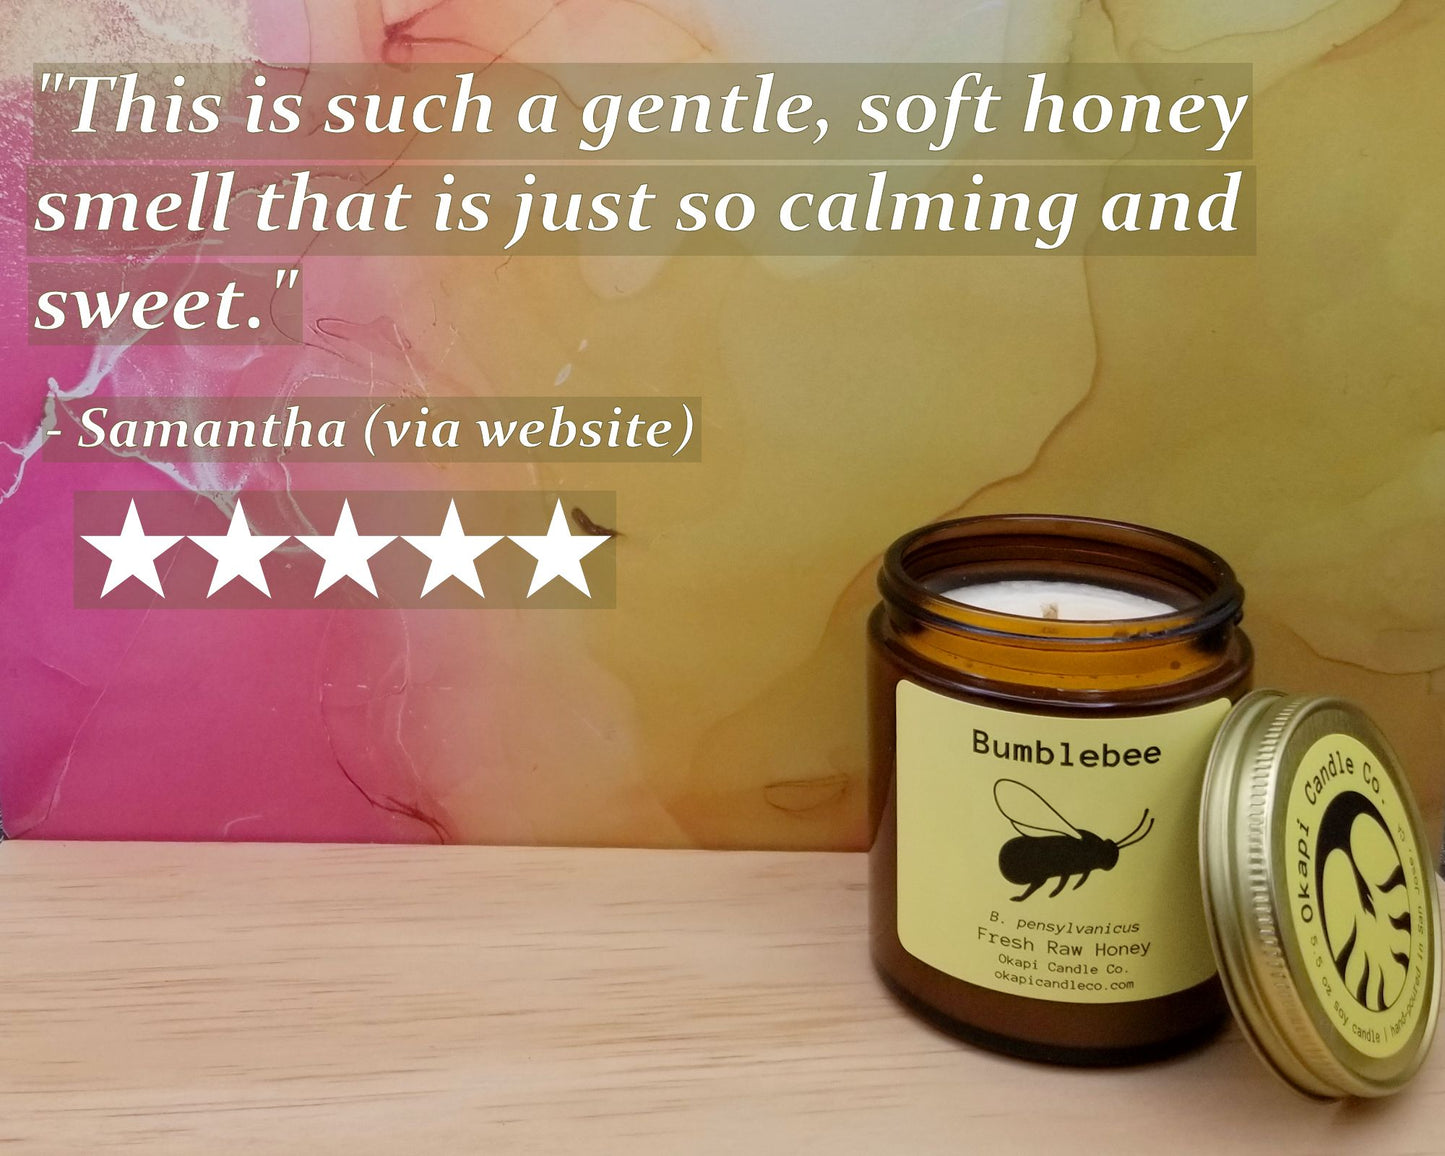 Bumblebee Soy Candle - Fresh Raw Honey Fragrance